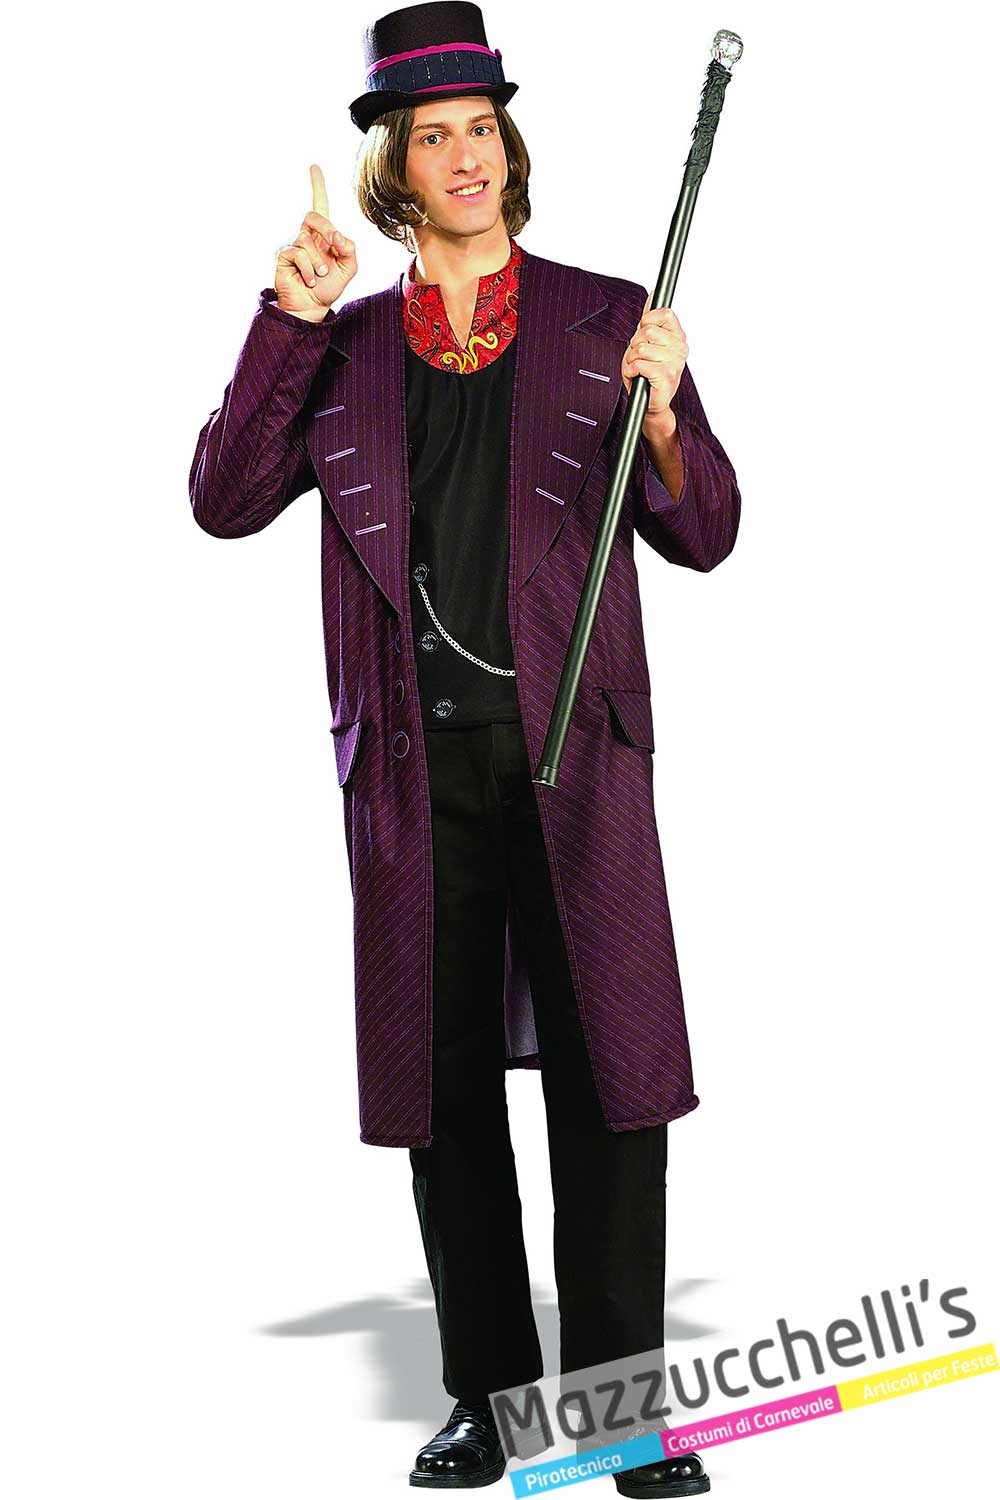 Idee di carnevale: il costume da Willy Wonka · Pane, Amore e